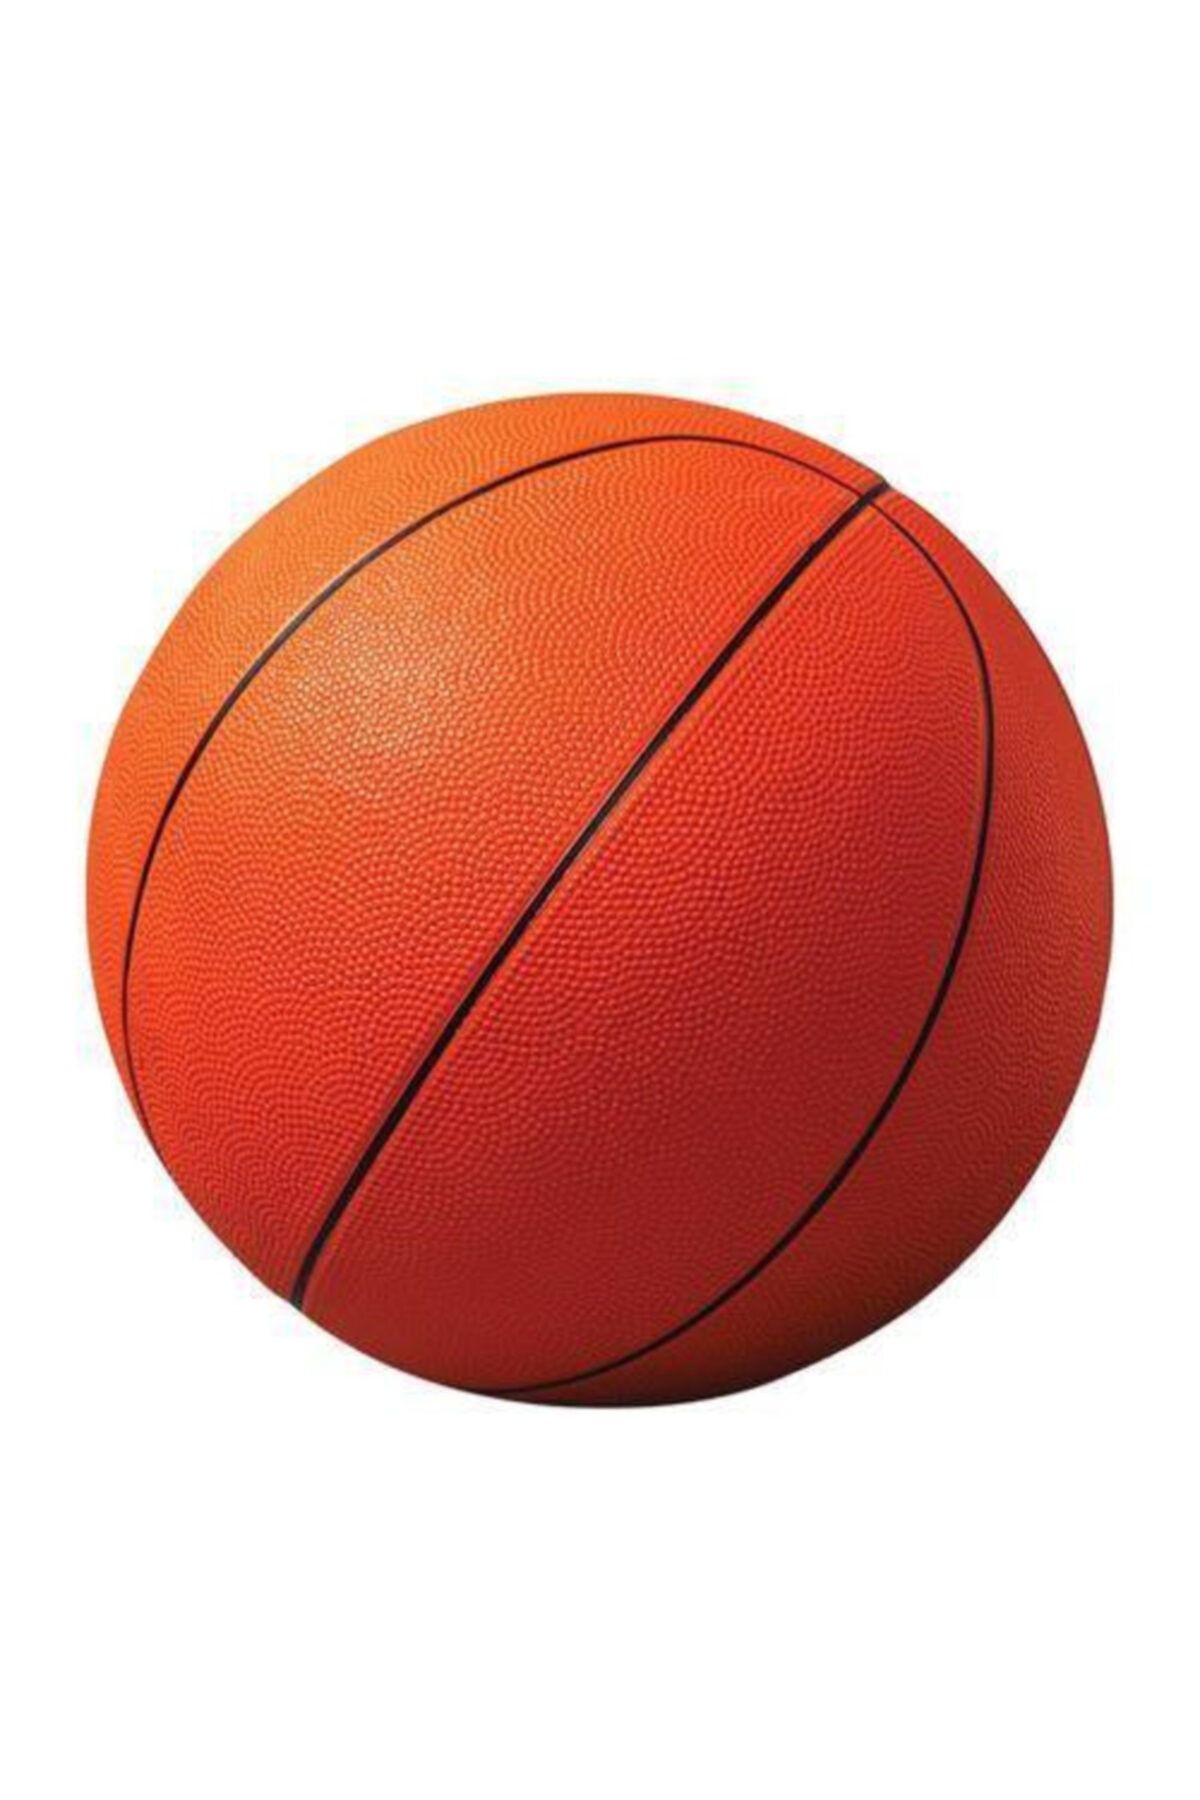 AlanMemnun Kauçuk Basketbol Topu Profesyonel Boy